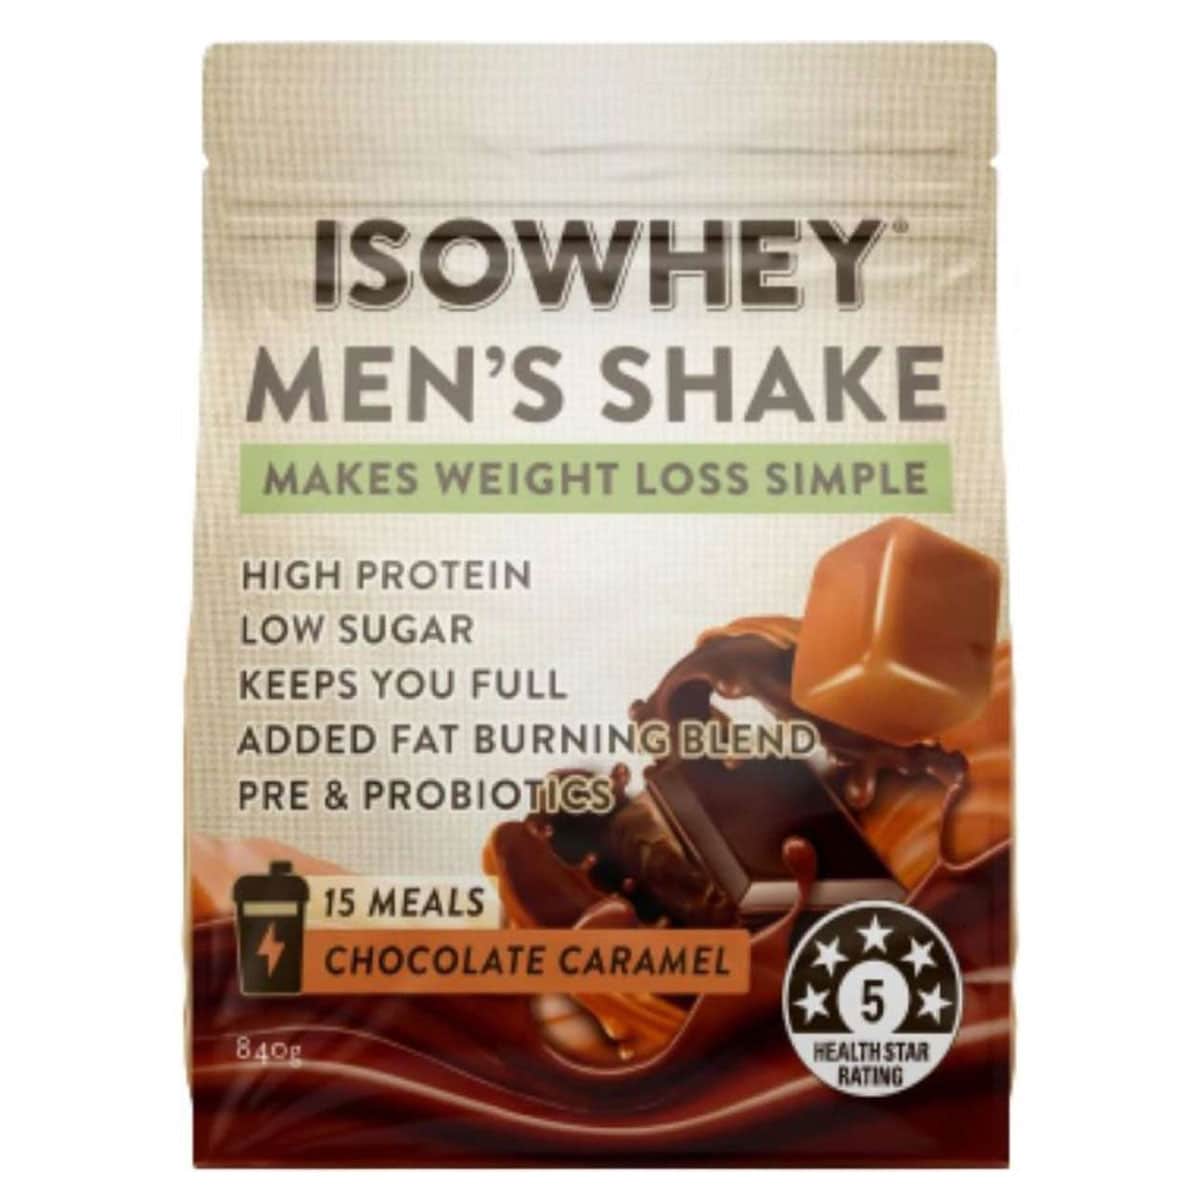 IsoWhey Men's Shake Choc Caramel 840g Australia